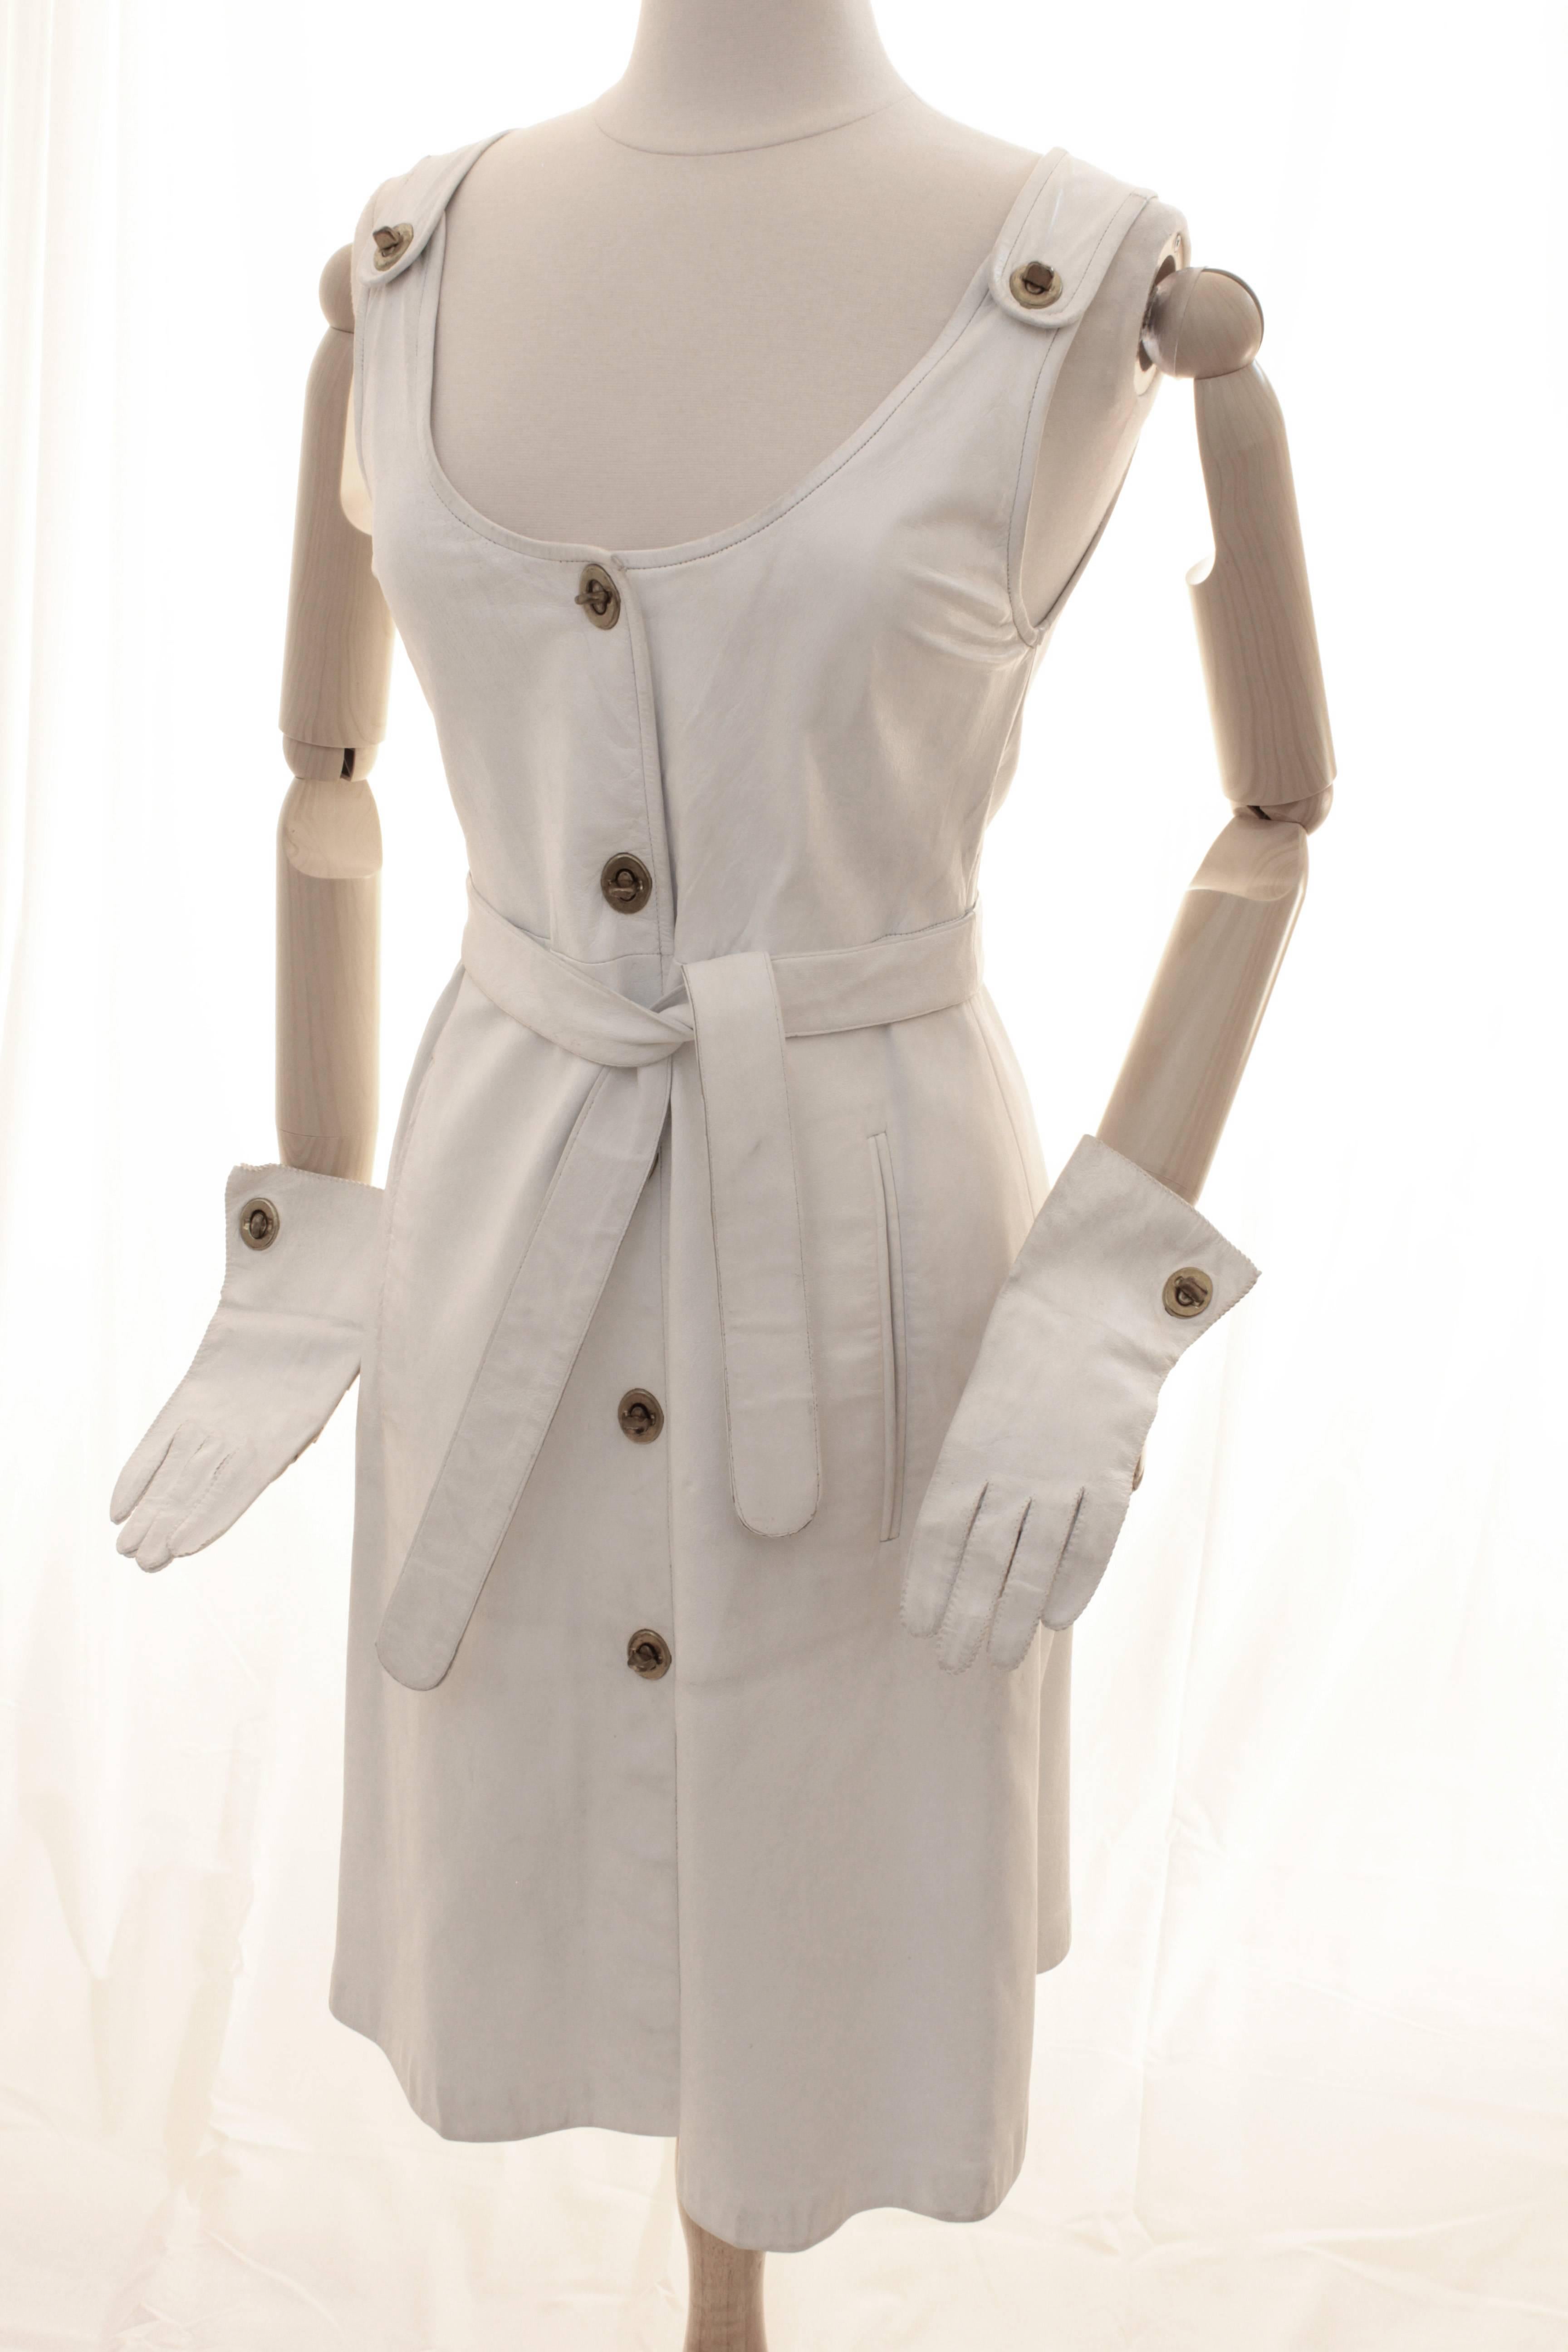 Mod Bonnie Cashin White Leather Mini Dress Set with Matching Belt & Gloves 60s M 2